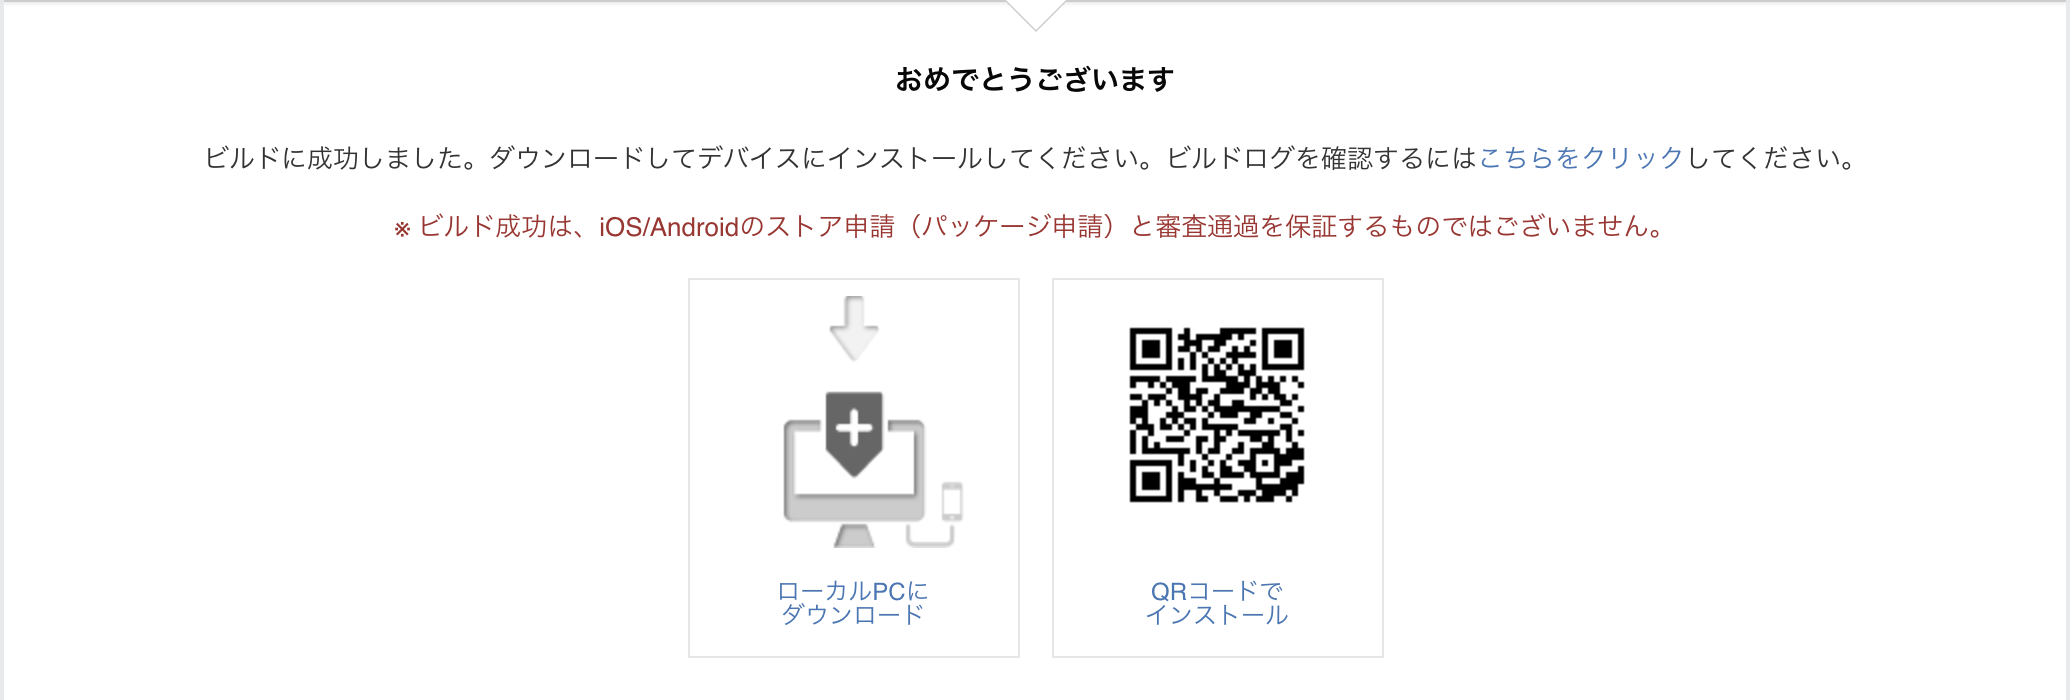 Blog Monacaアプリで指紋認証を実装する Ohoshi Me